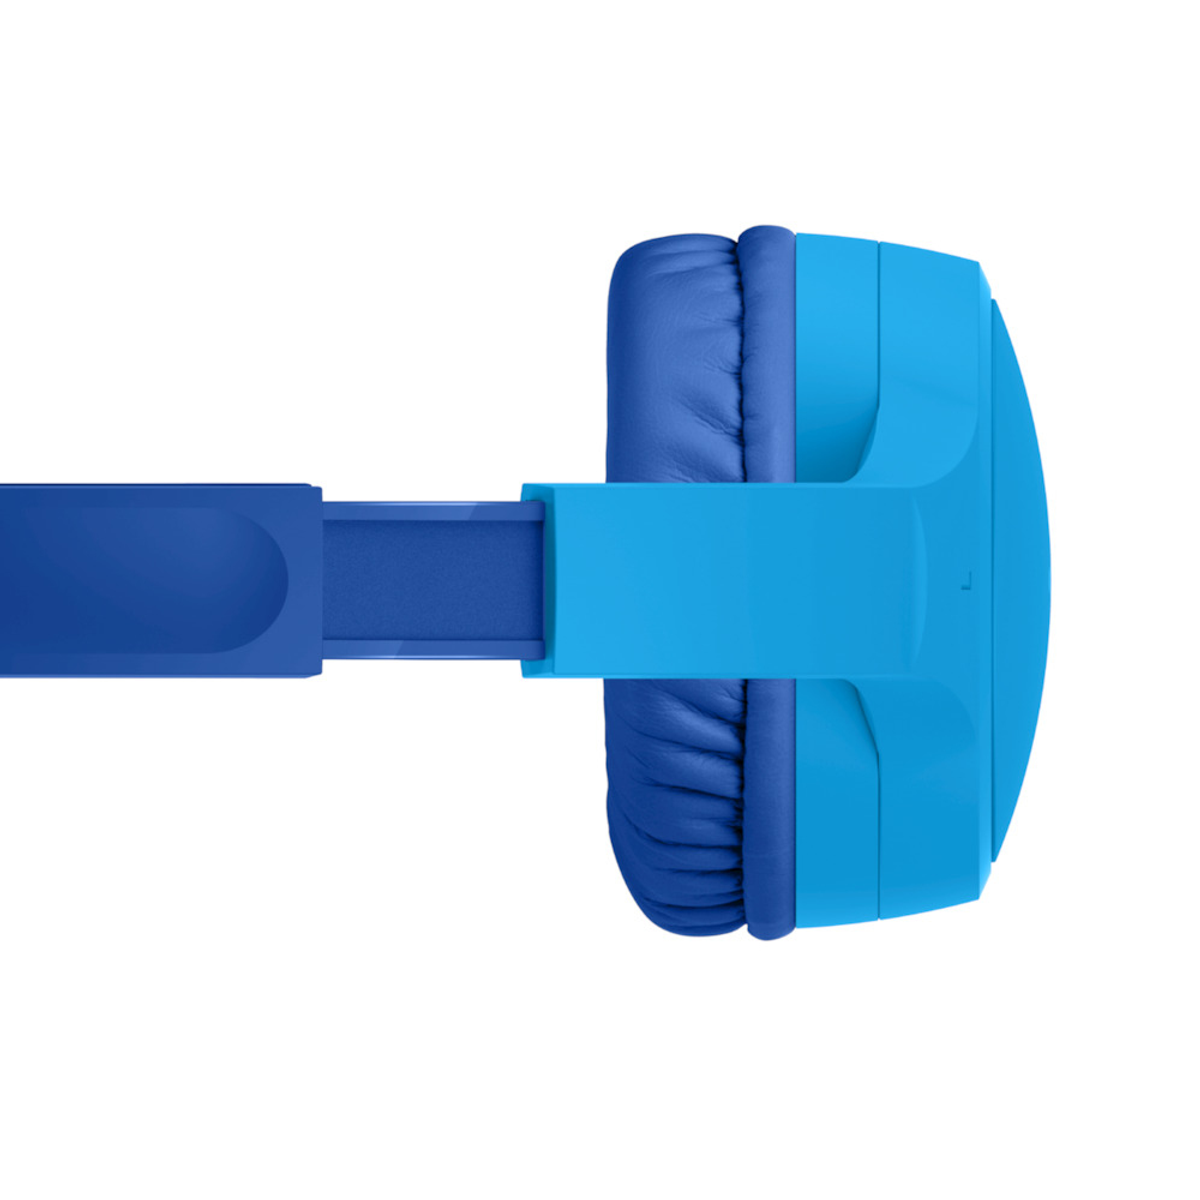 blau BELKIN Bluetooth On-Ear-Kinderkopfhörer Mini, On-ear SOUNDFORM™